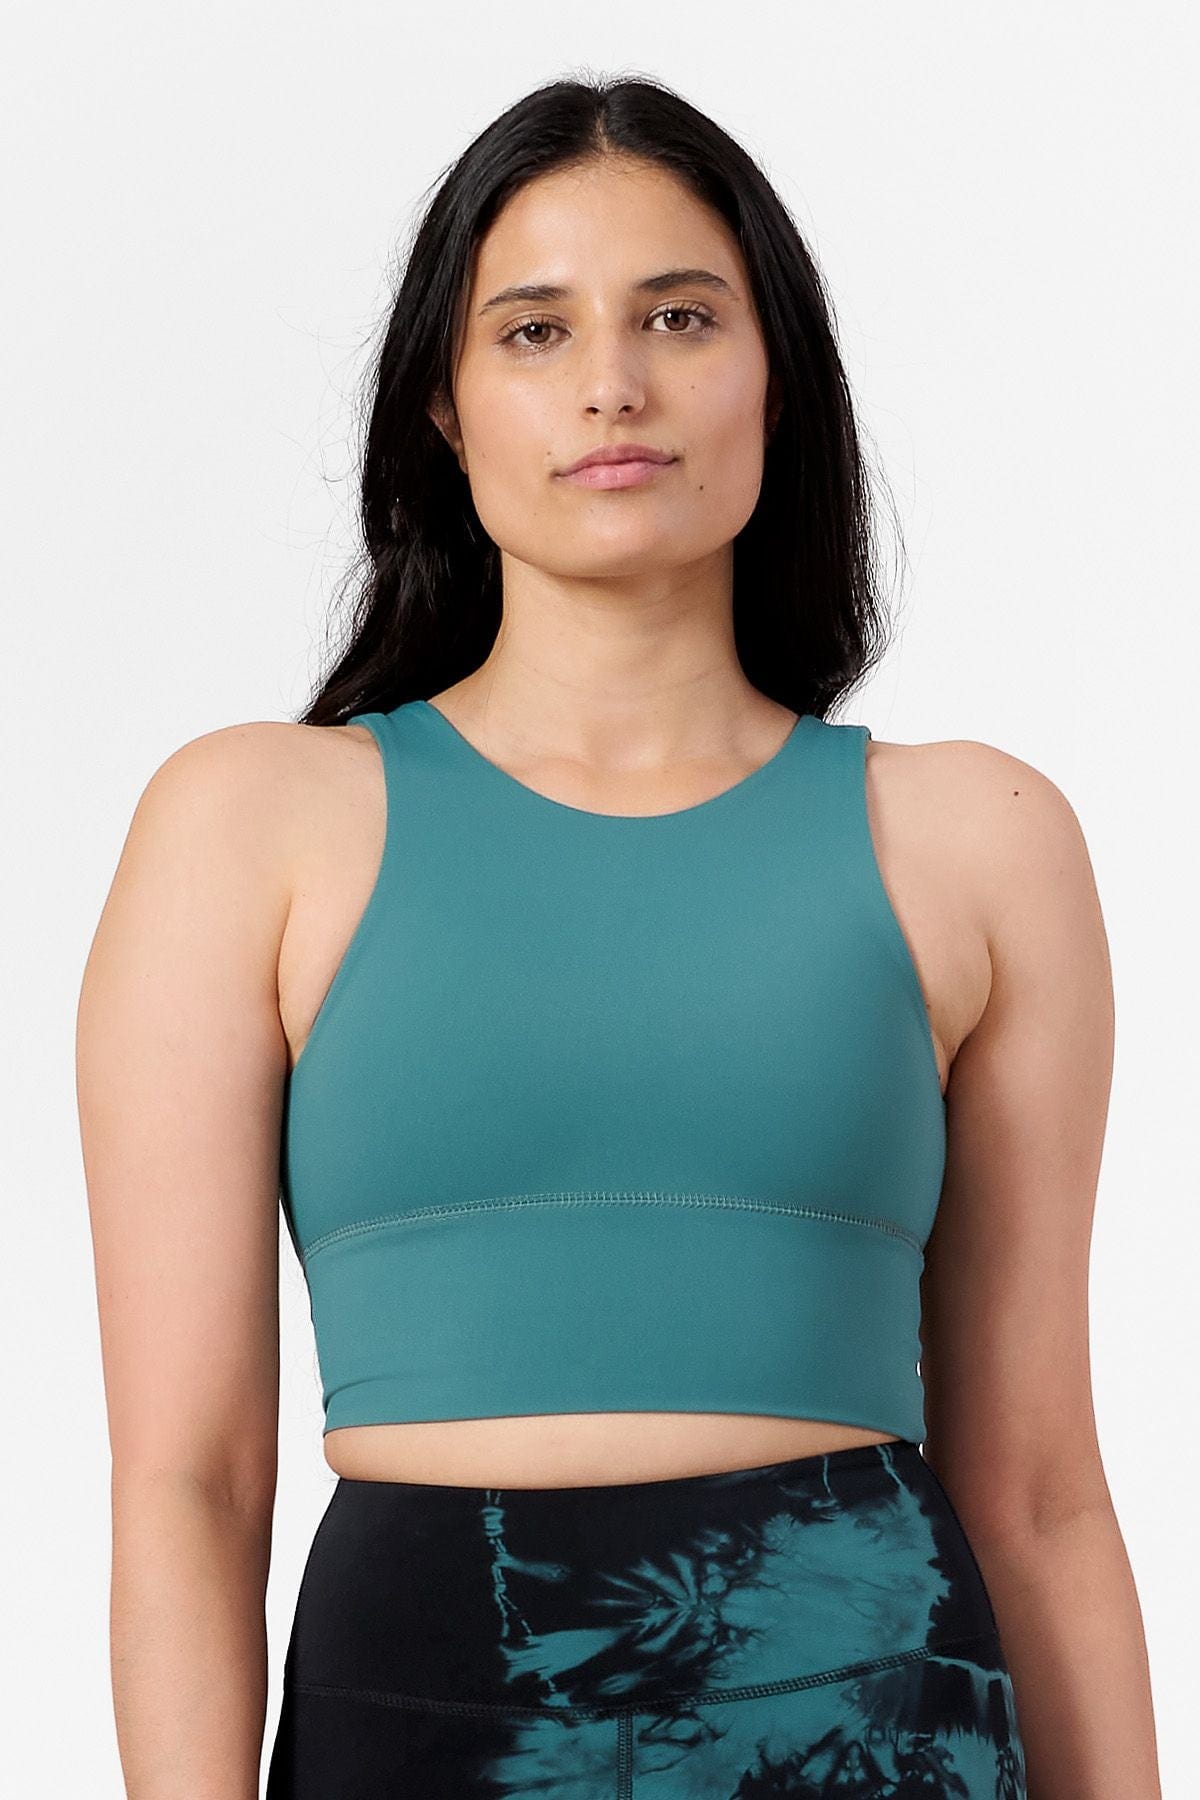 a woman wearing a reversible high neck sports bra